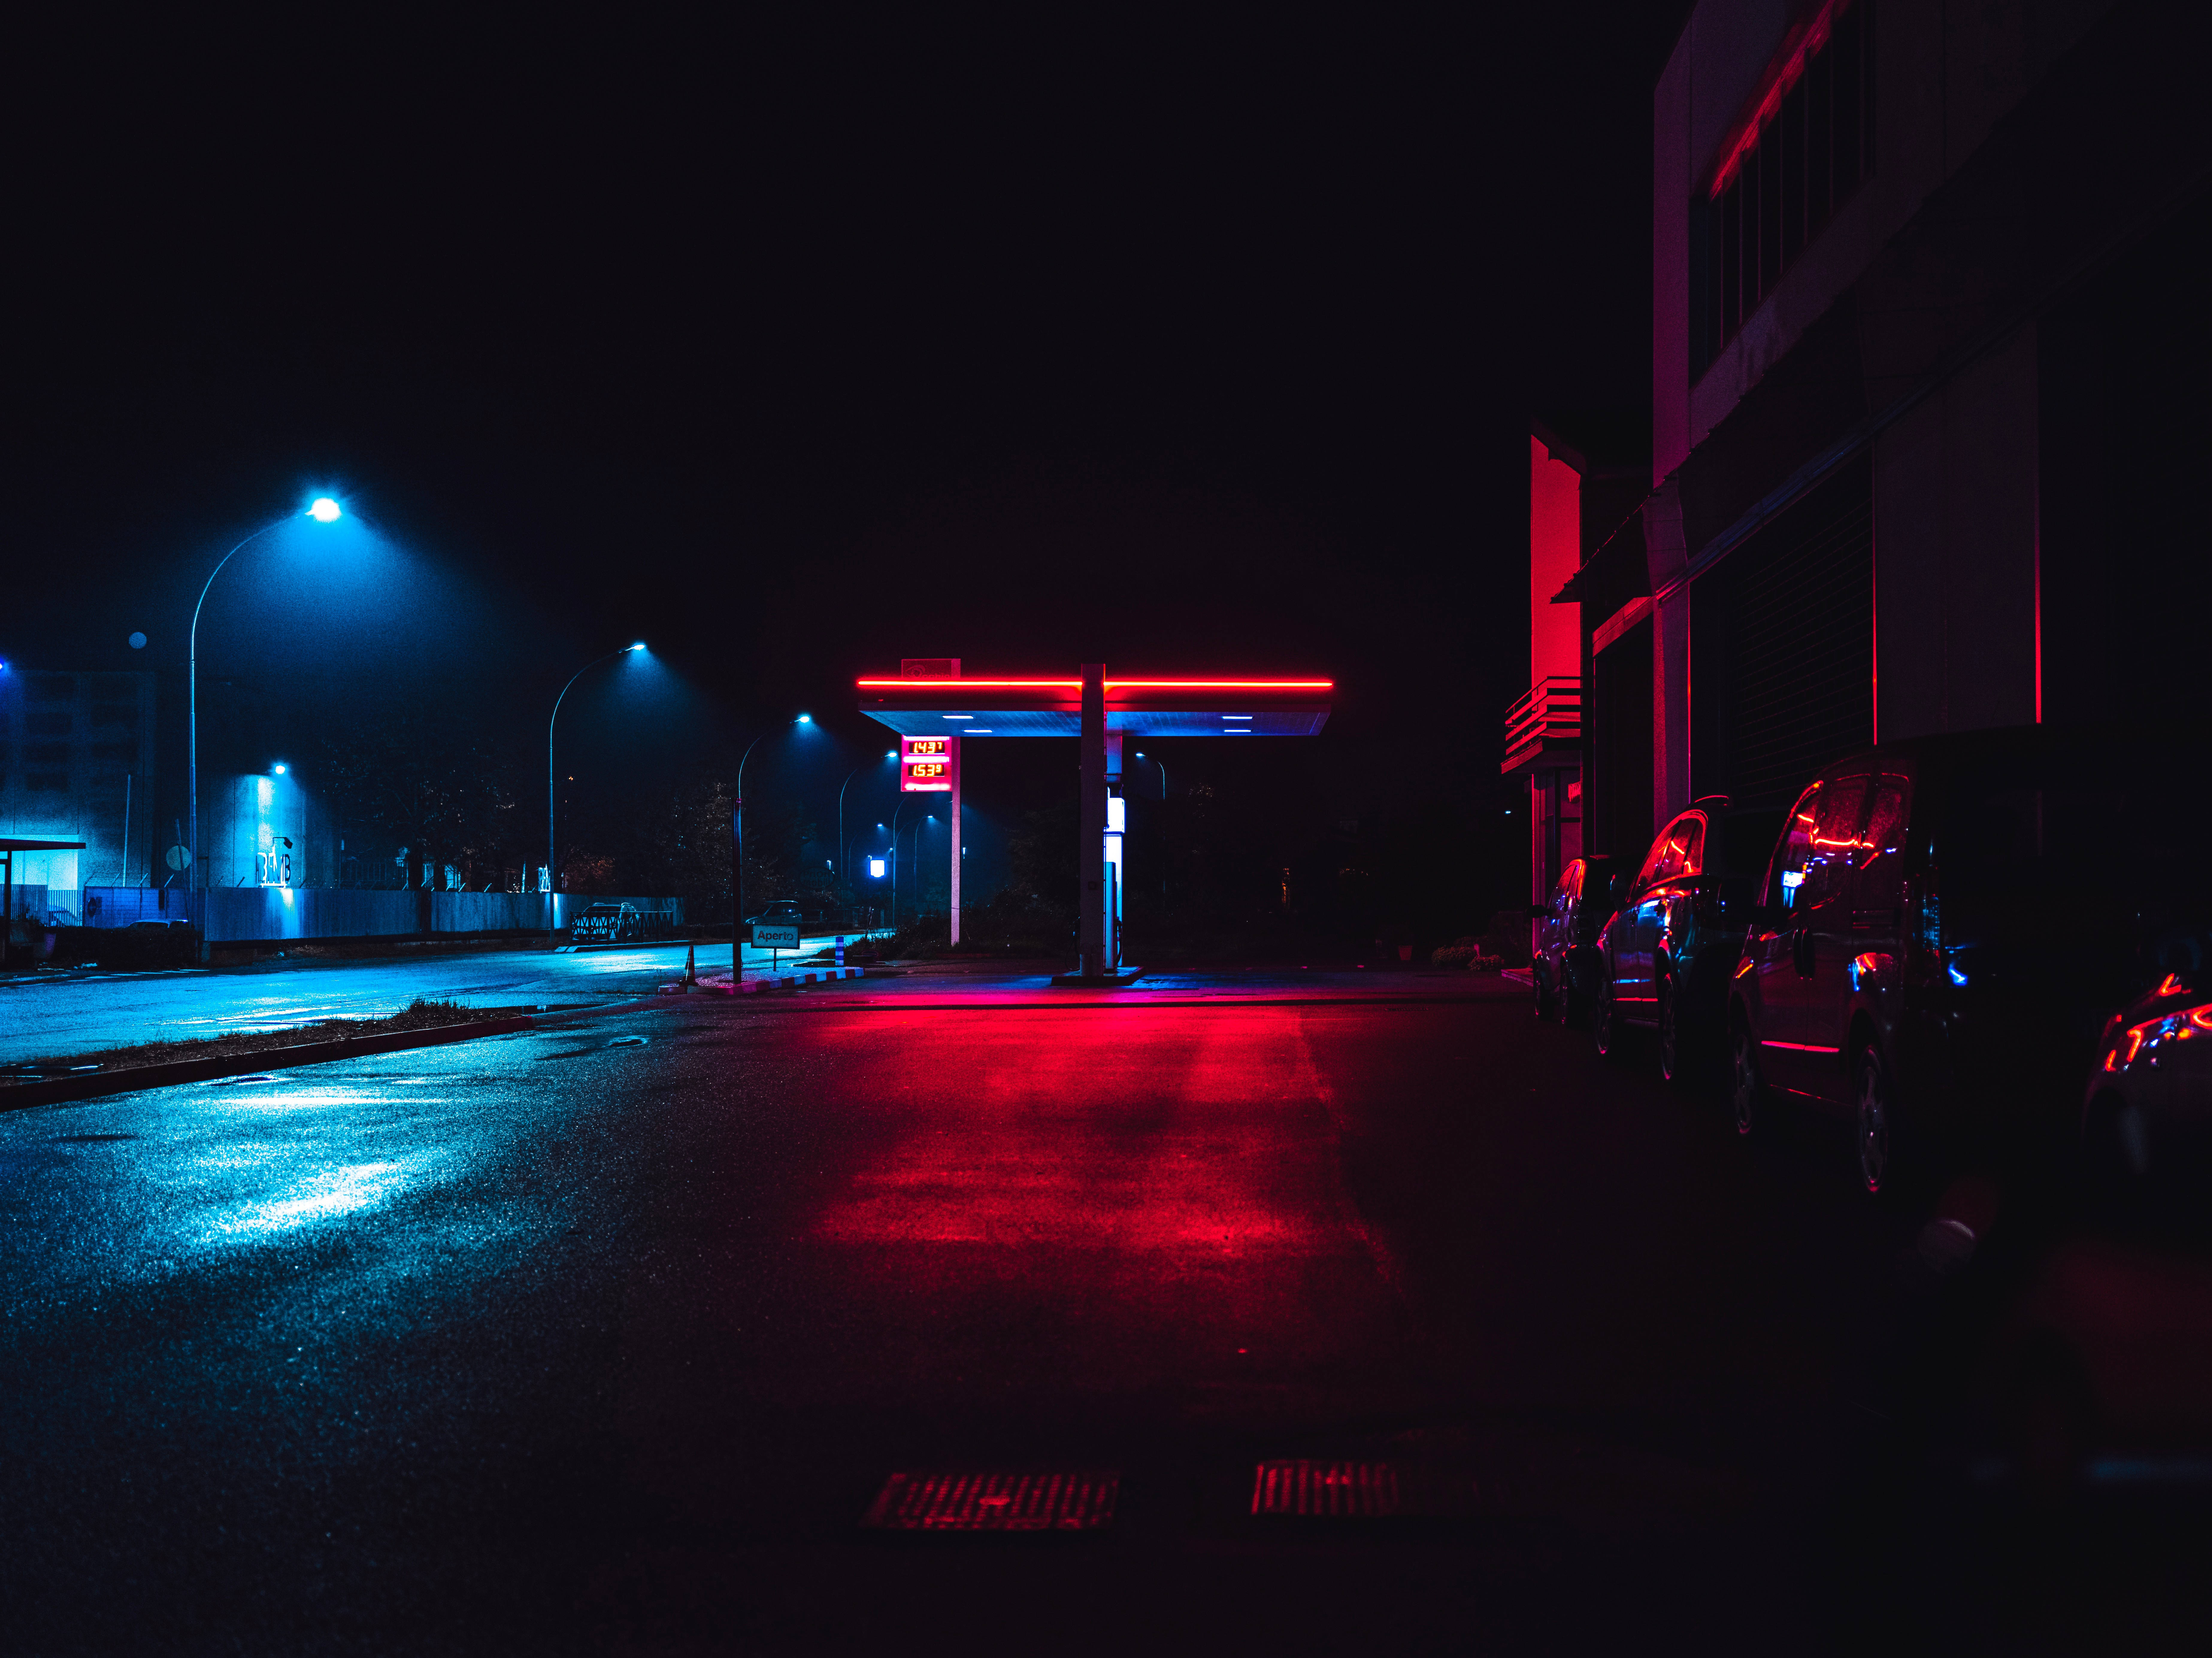 City Gasoline Station Neon Light Background